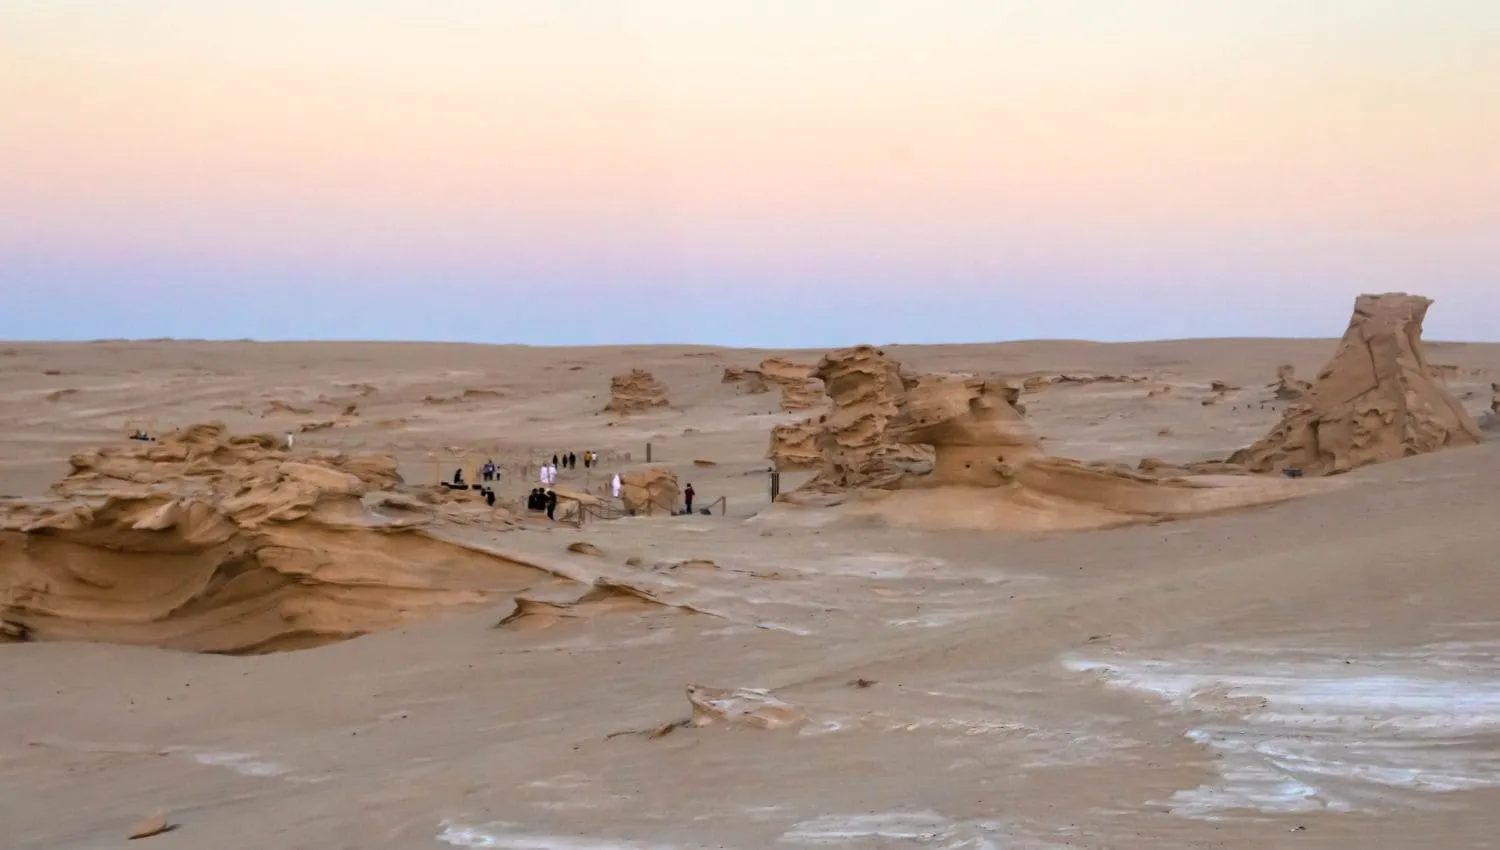 Fossil Dunes in Al Wathba, close to Abu Dhabi